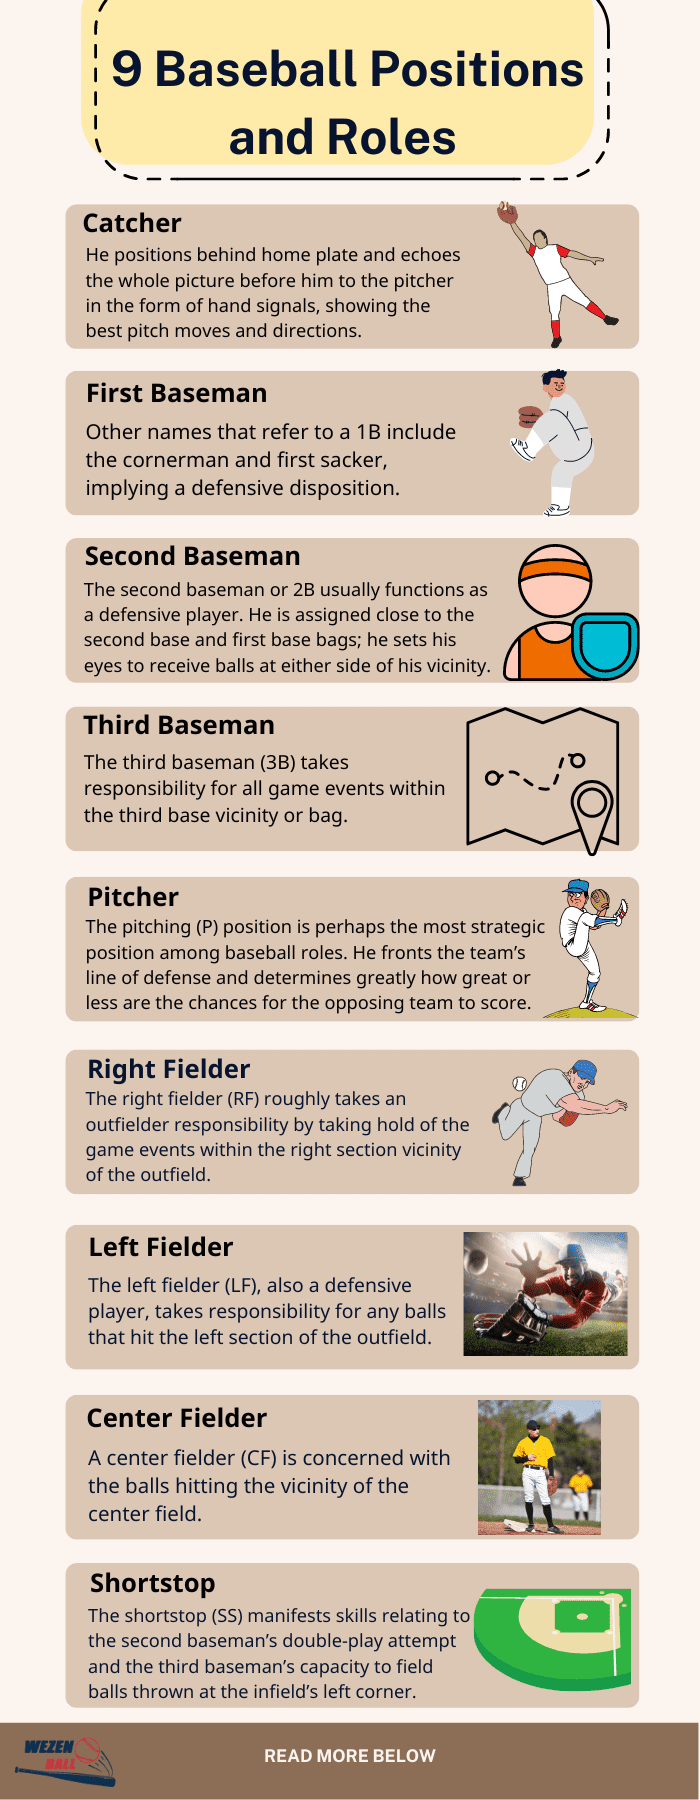 baseball-positions-1-9